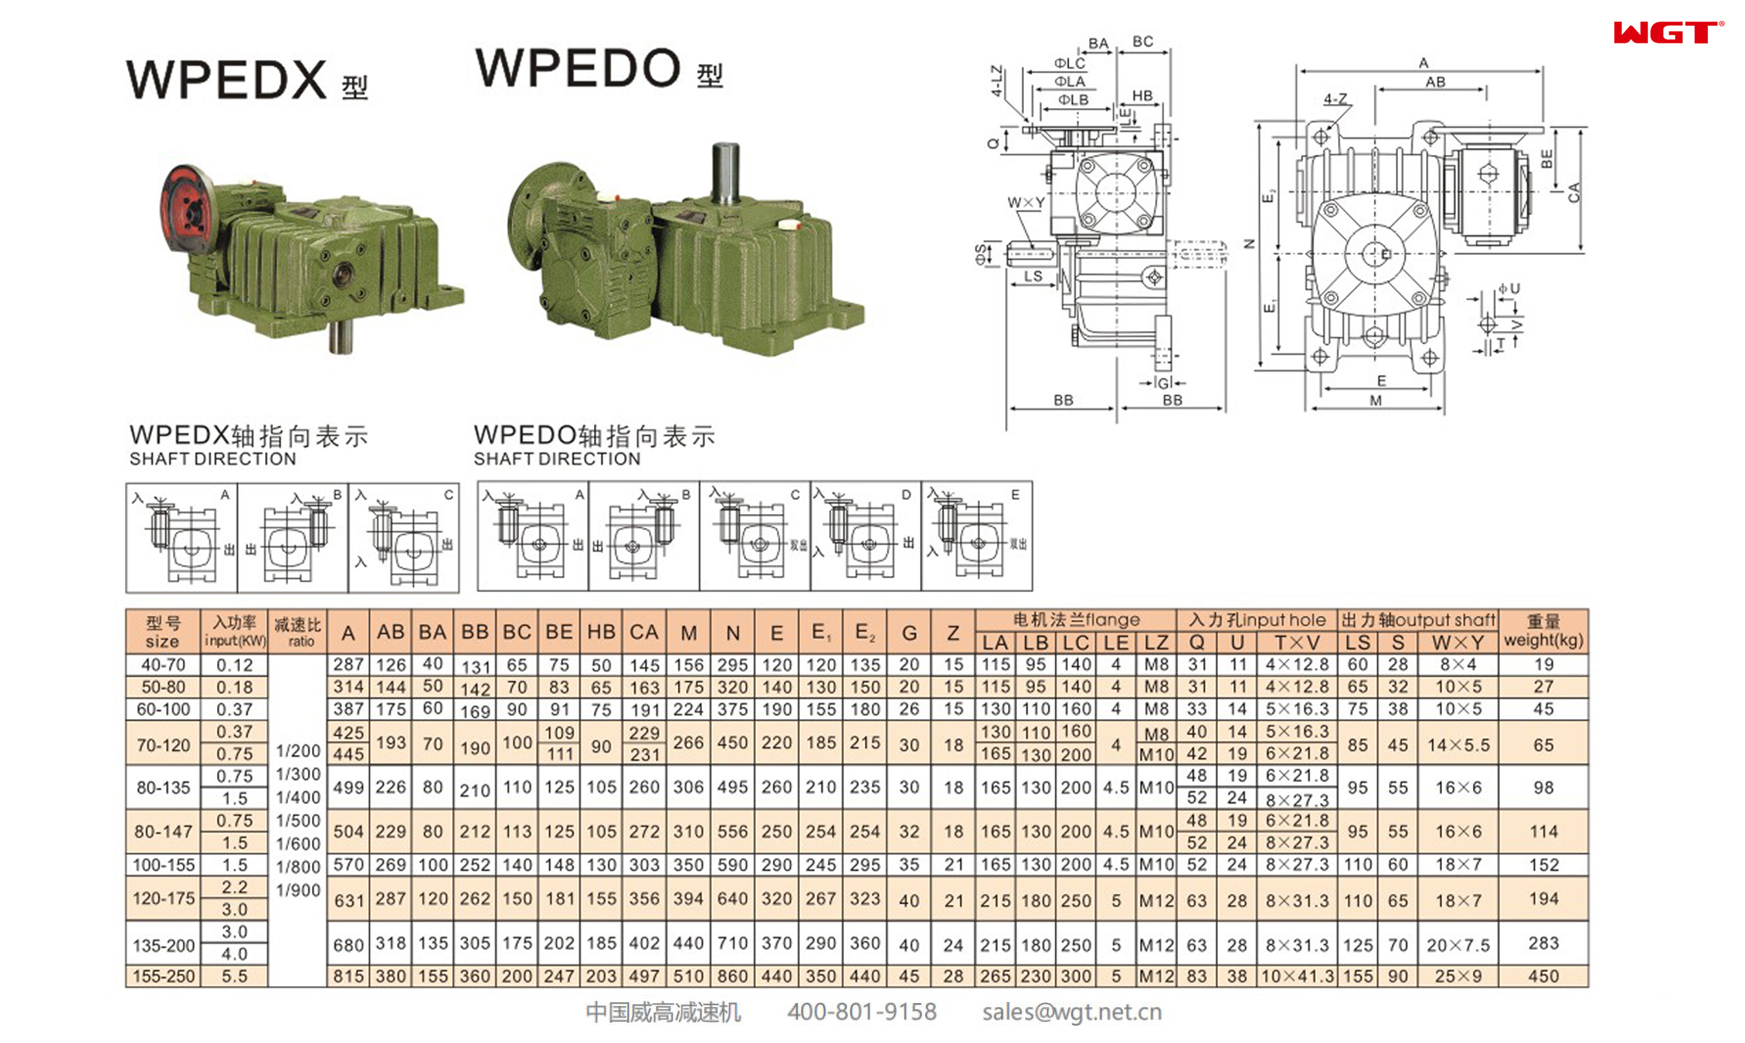 WPEDX WPEDO80-135 worm gear reducer double speed reducer